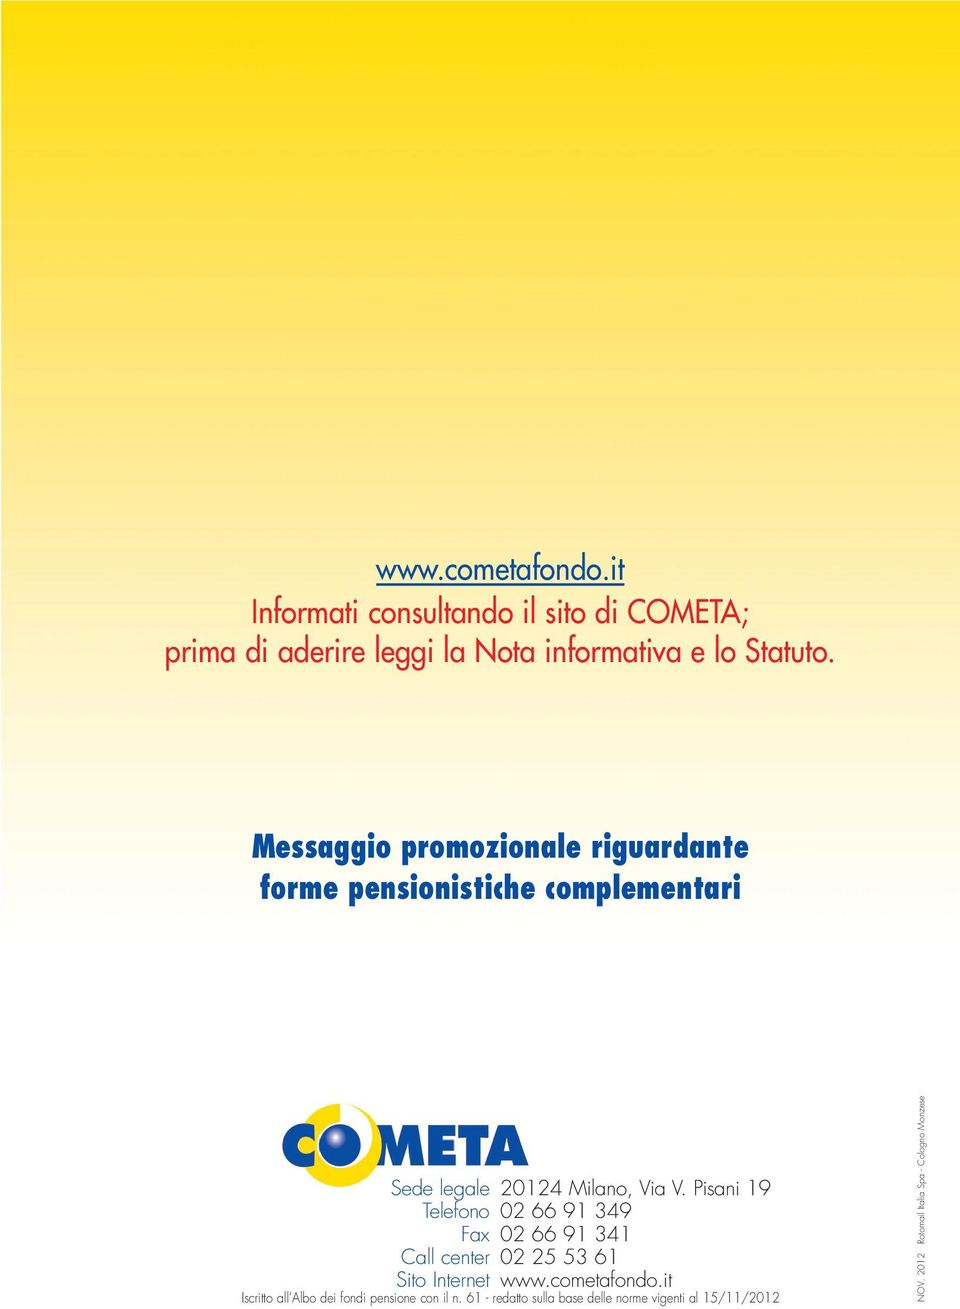 Internet 20124 Milano, Via V. Pisani 19 02 66 91 349 02 66 91 341 02 25 53 61 www.cometafondo.